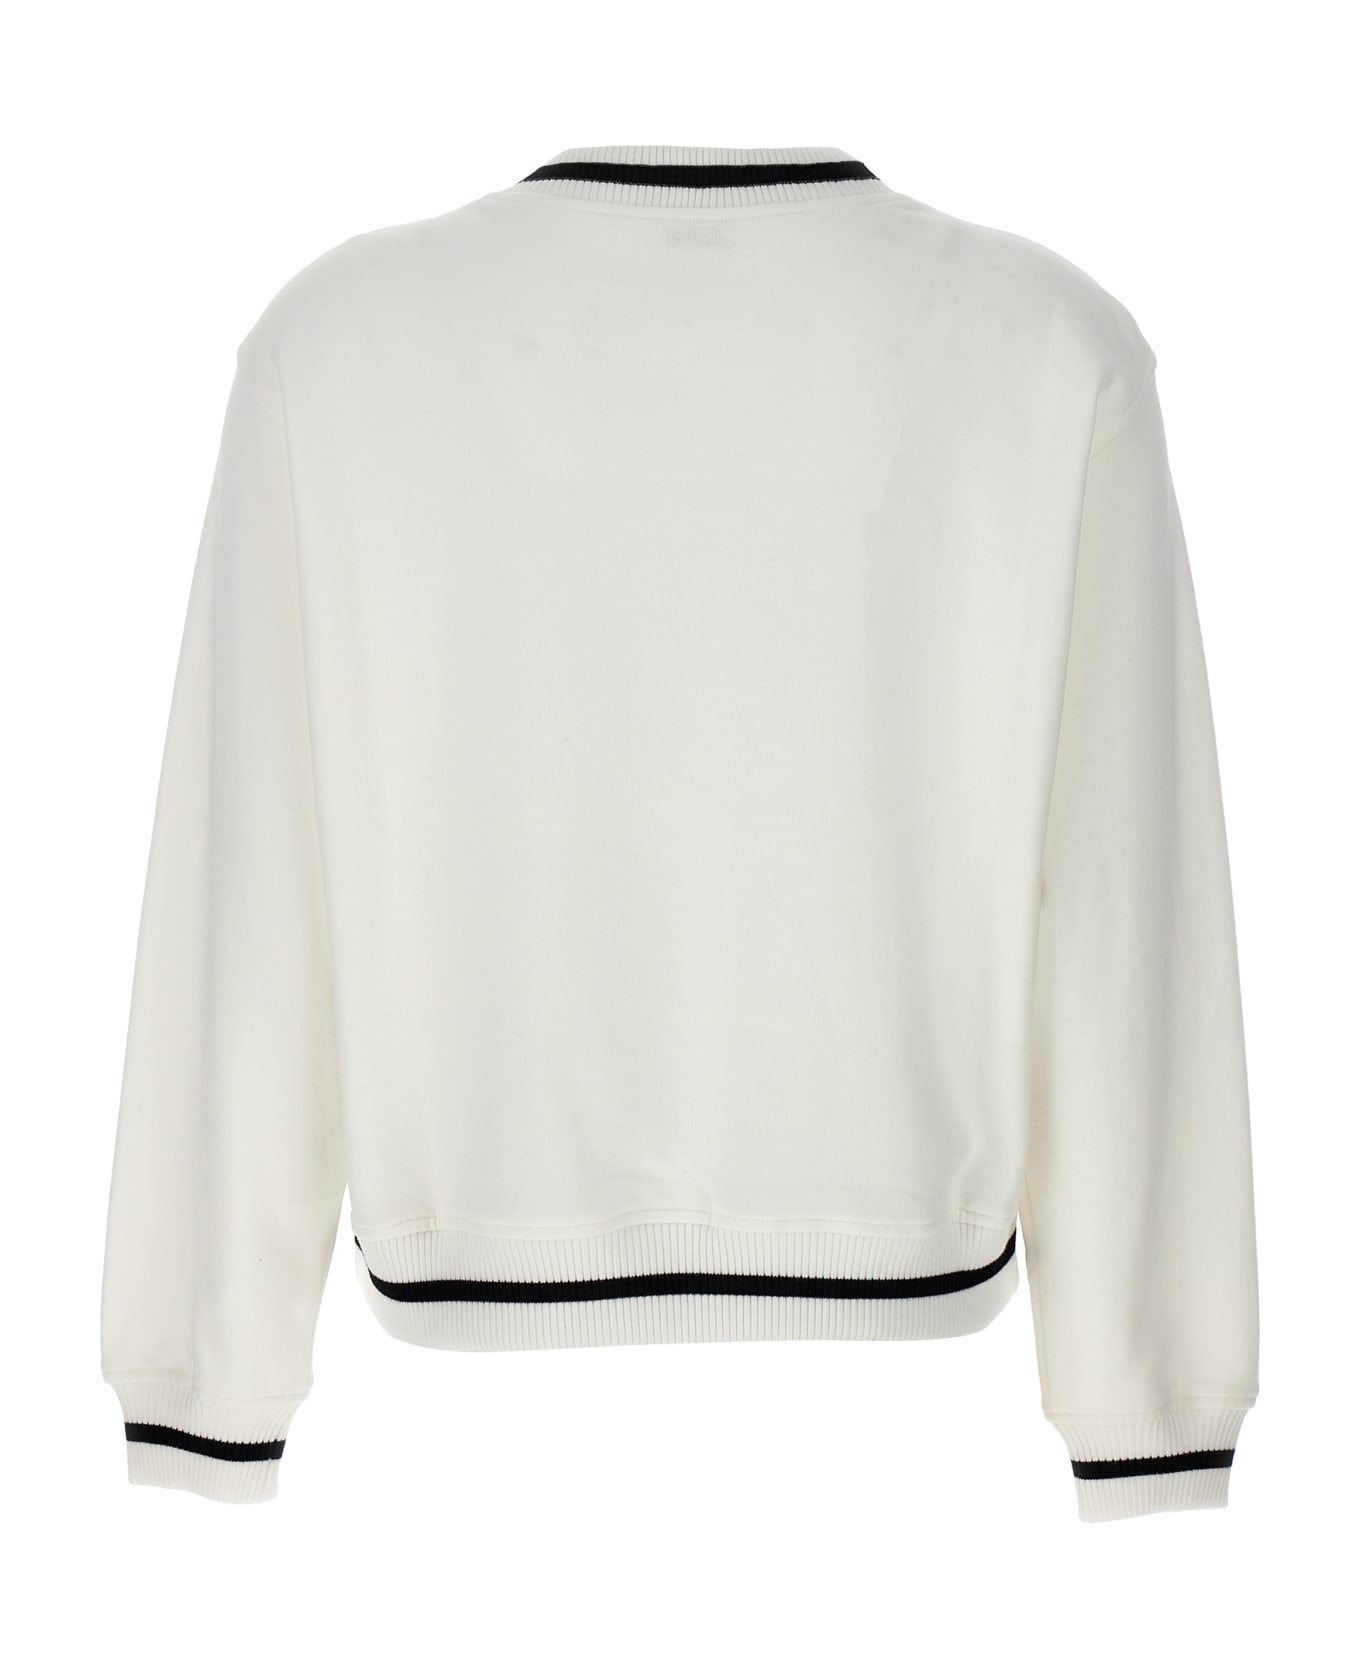 Brunello Cucinelli Logo Embroidery Sweatshirt - White/Black